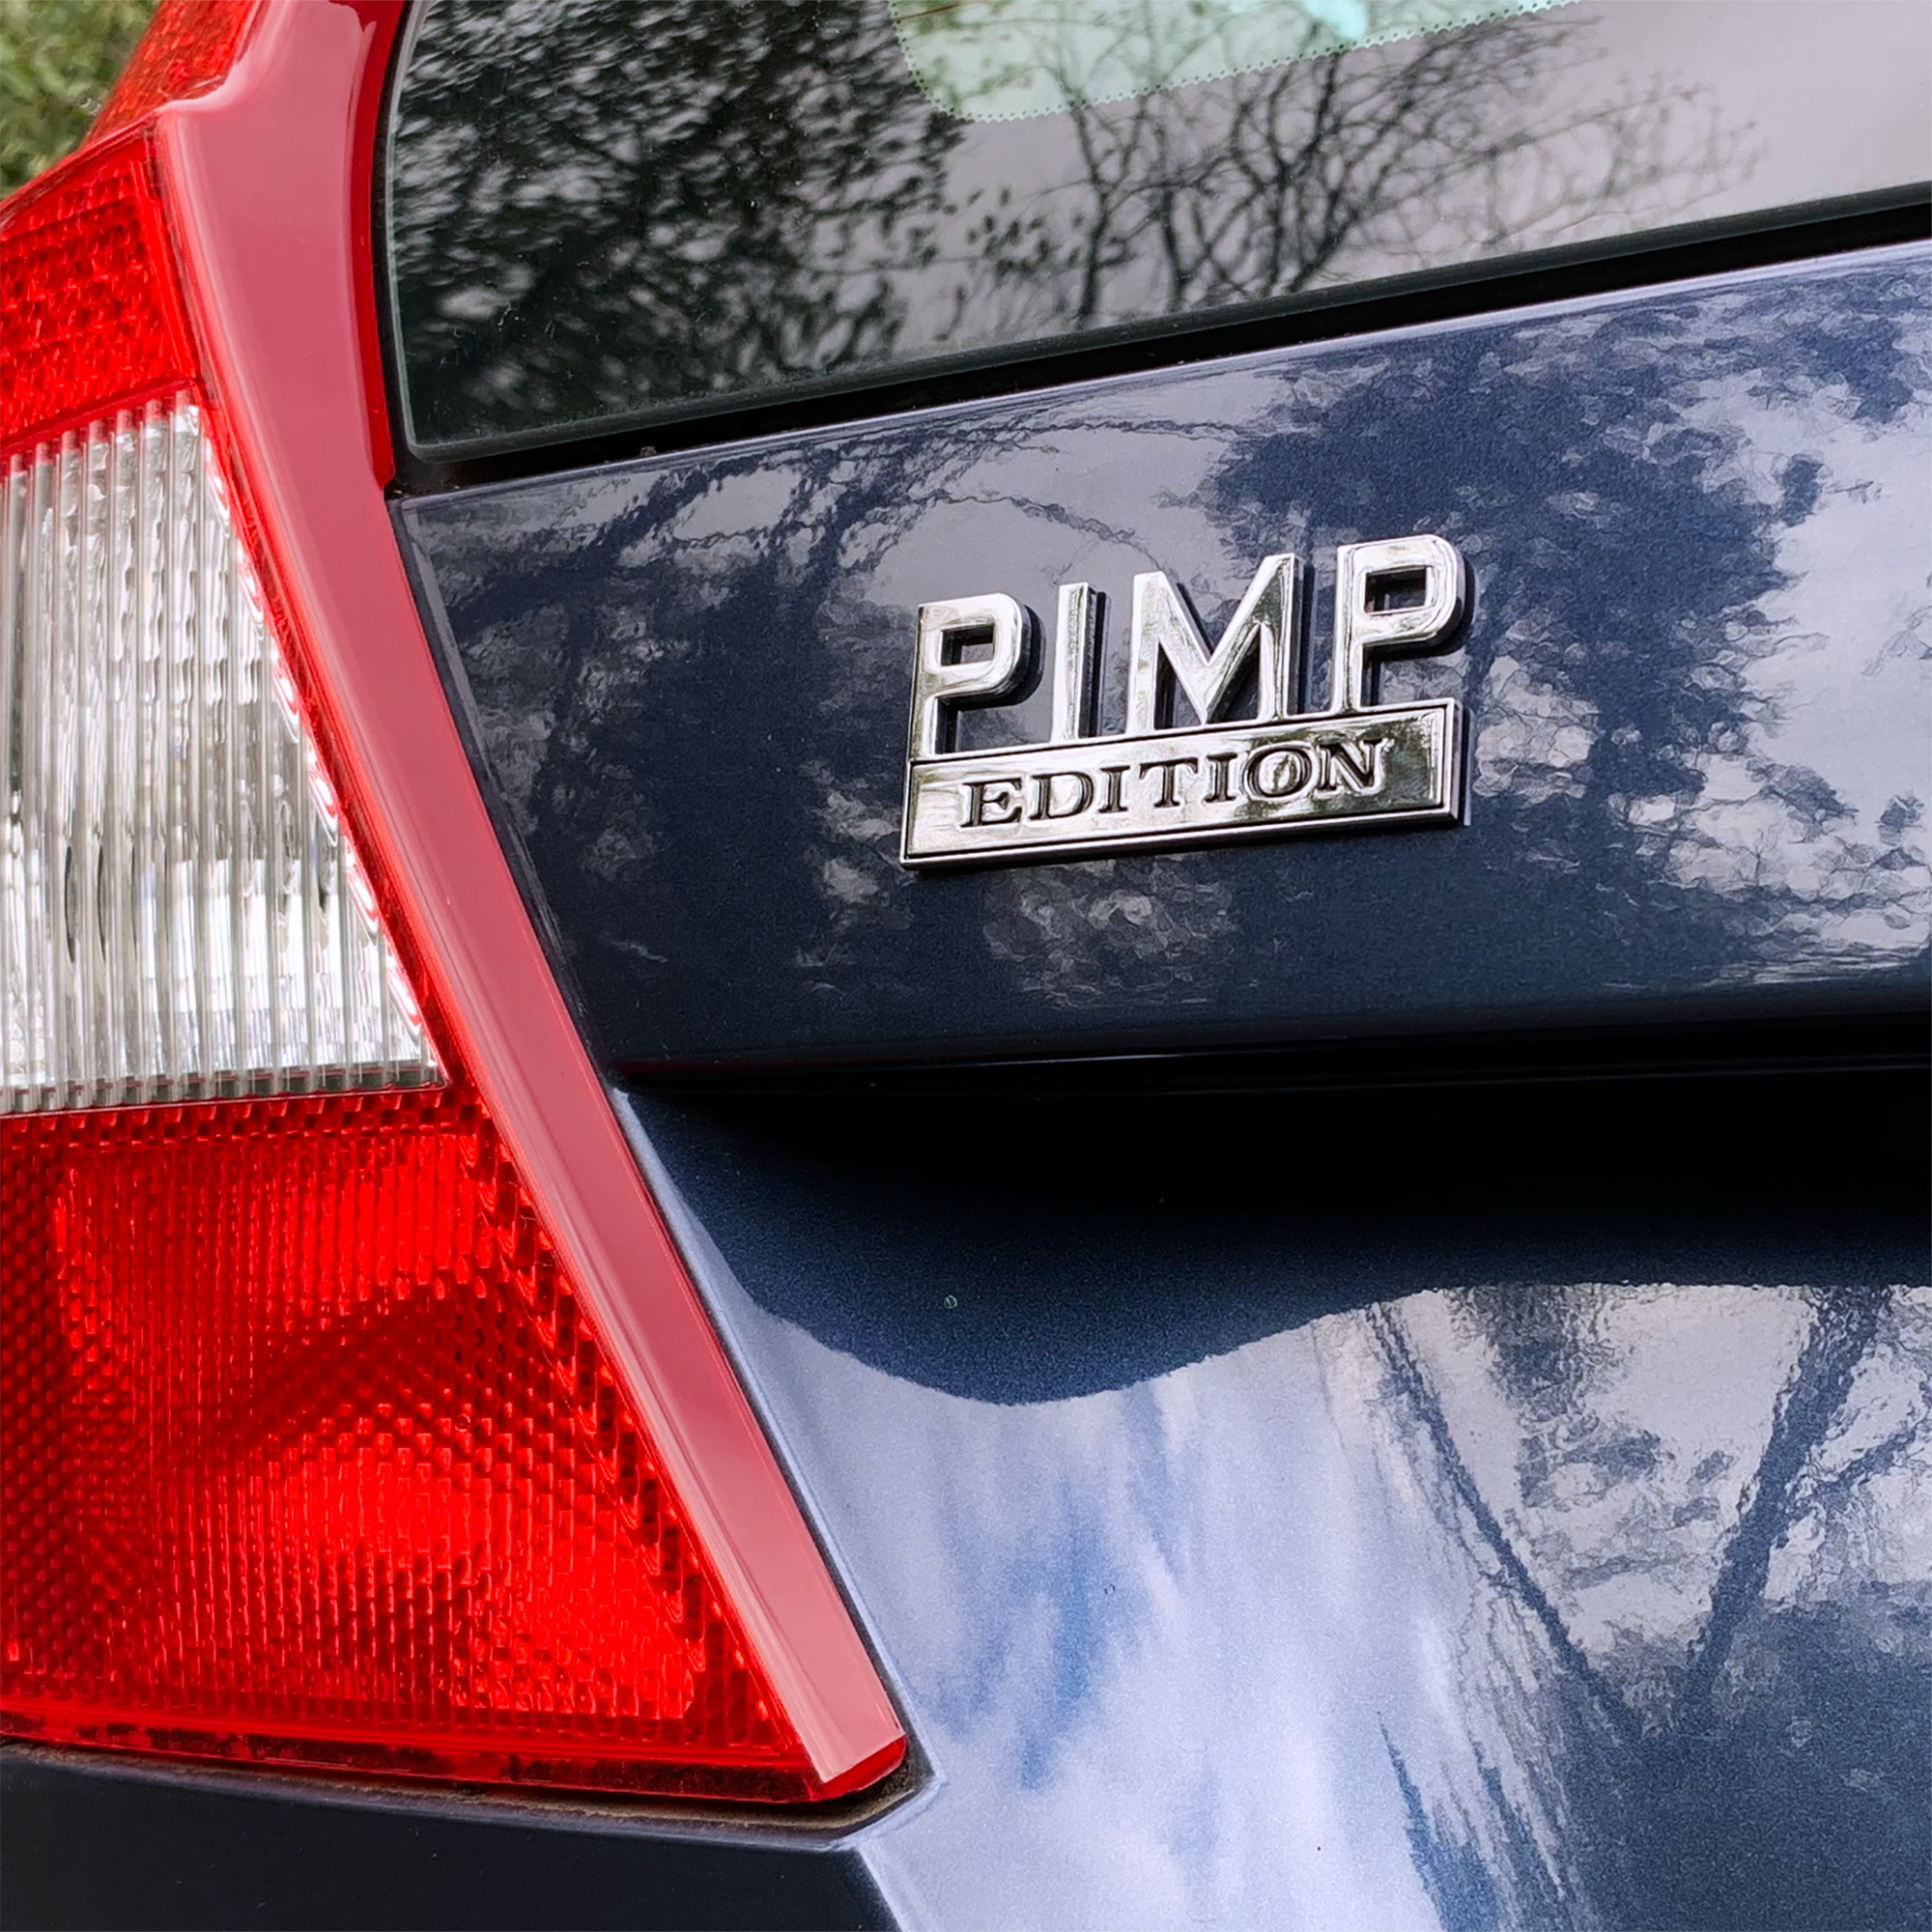 Pimp Edition Metal Emblem Installed on Rear Trunk